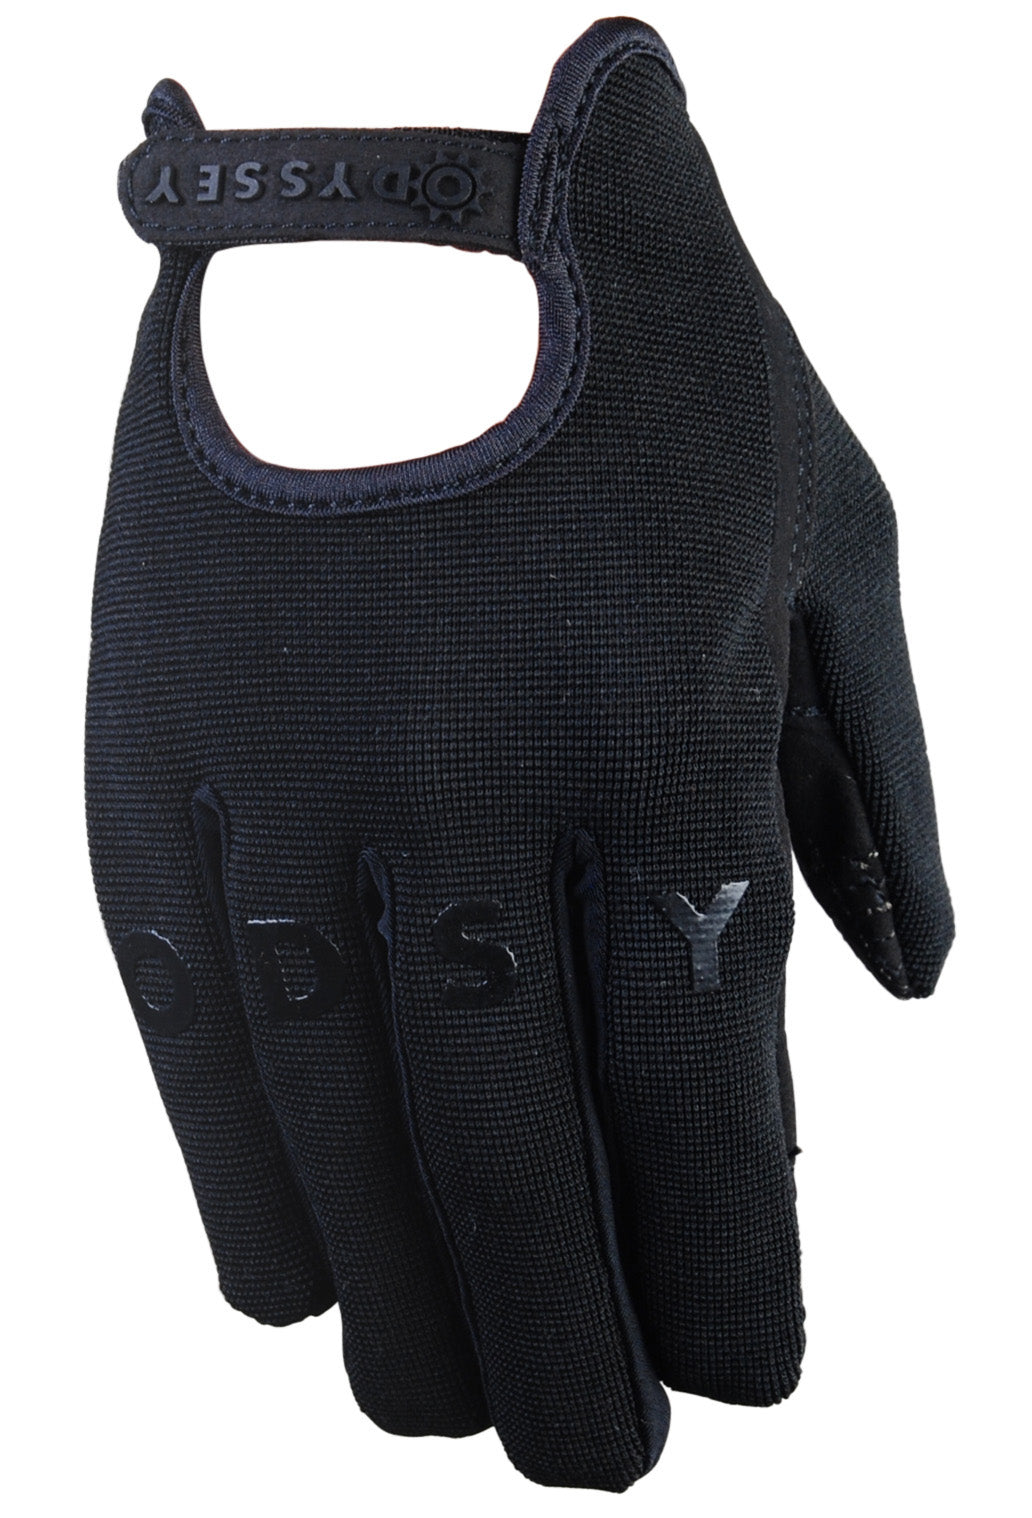 Odyssey Tom Dugan Small Glove